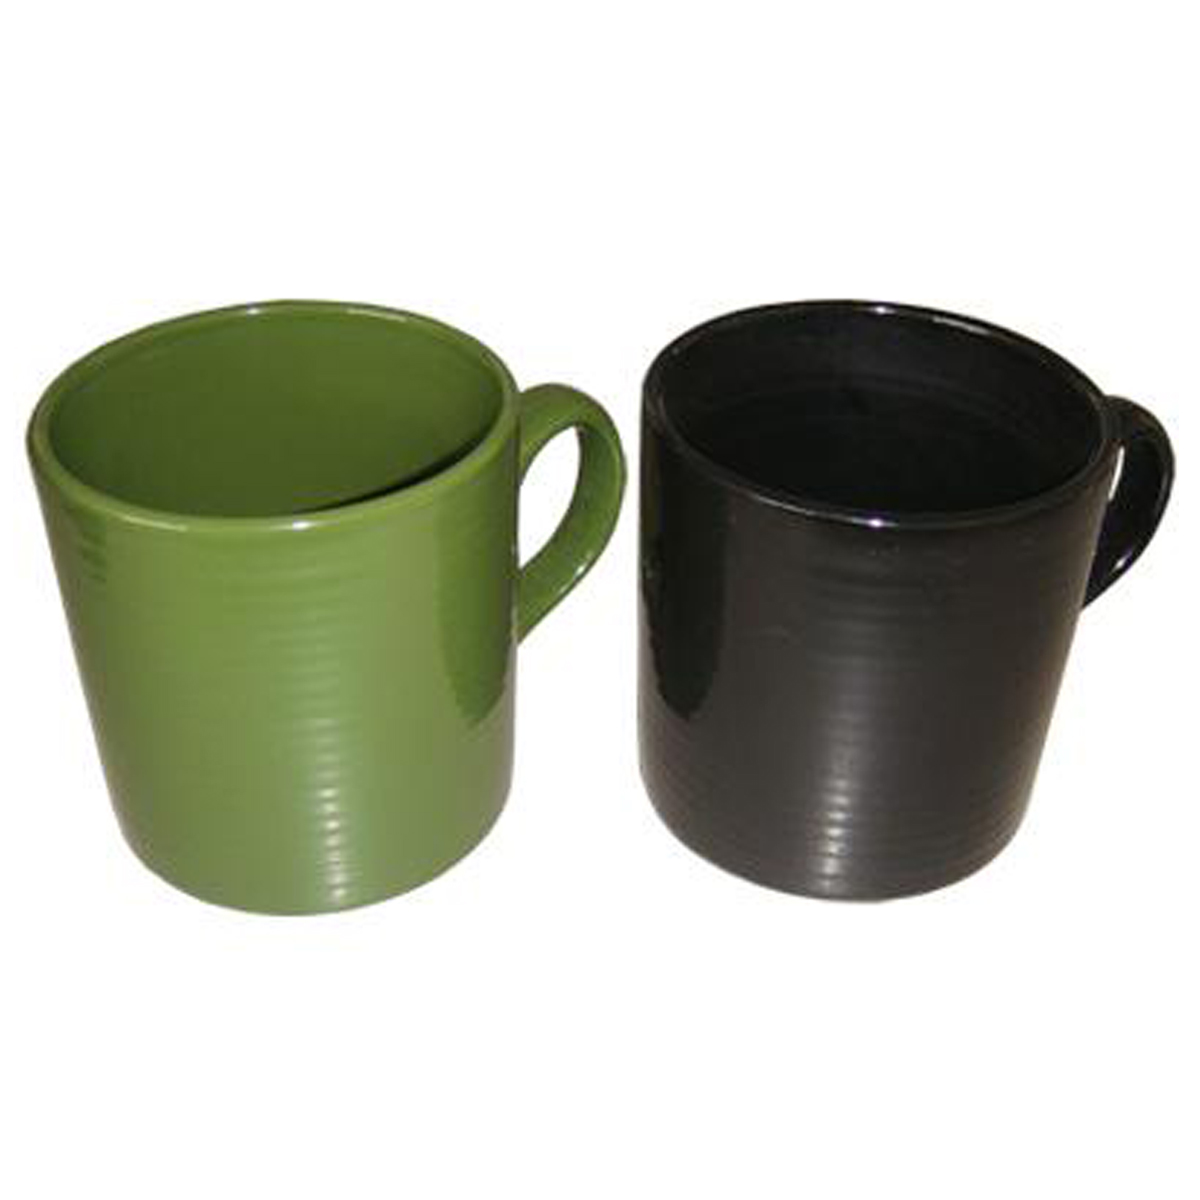 Color glazed ceramic mug